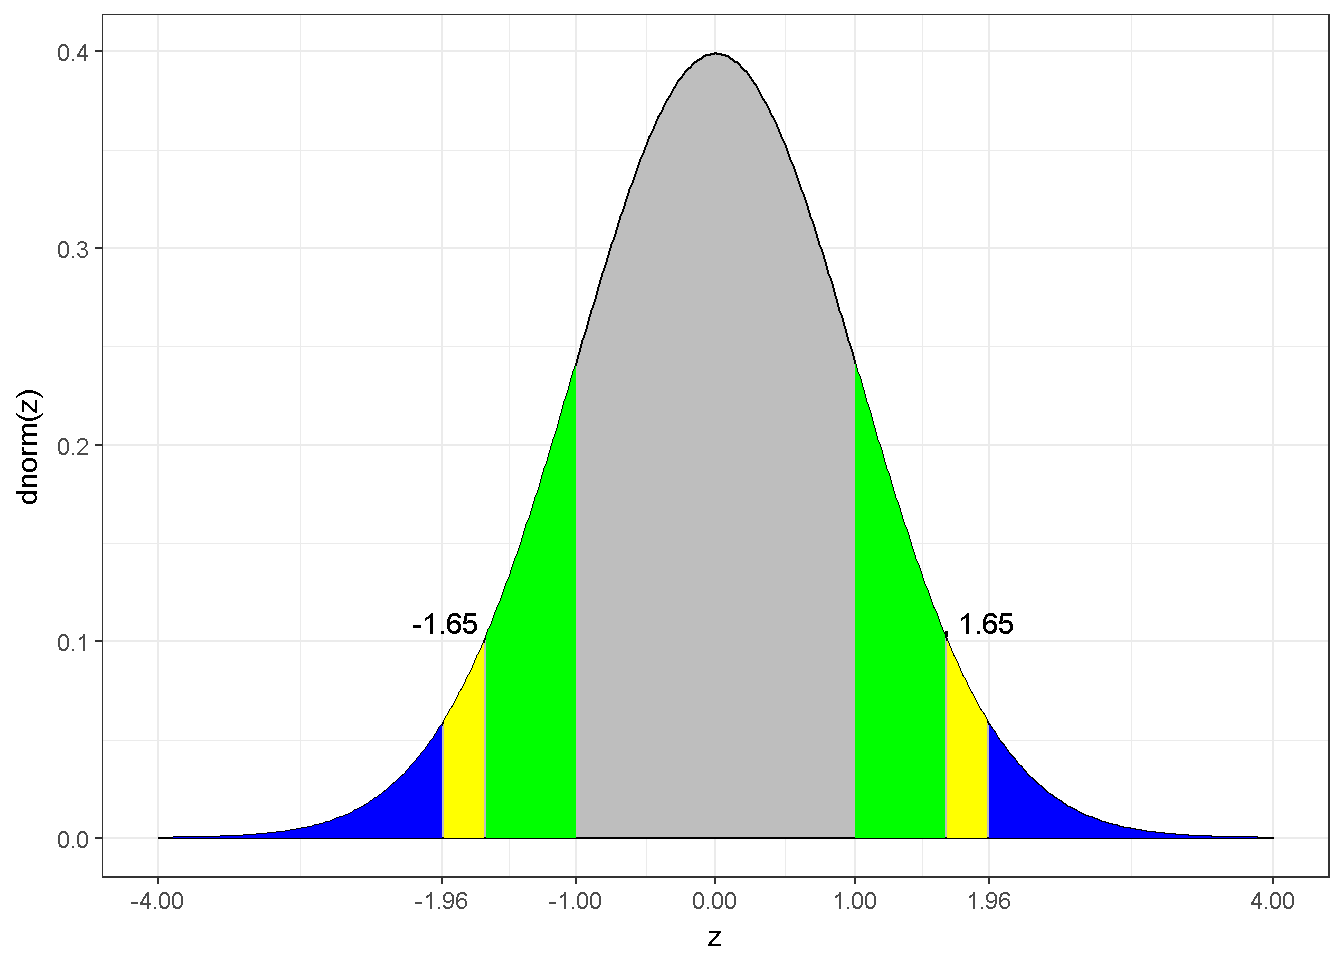 The z distribution